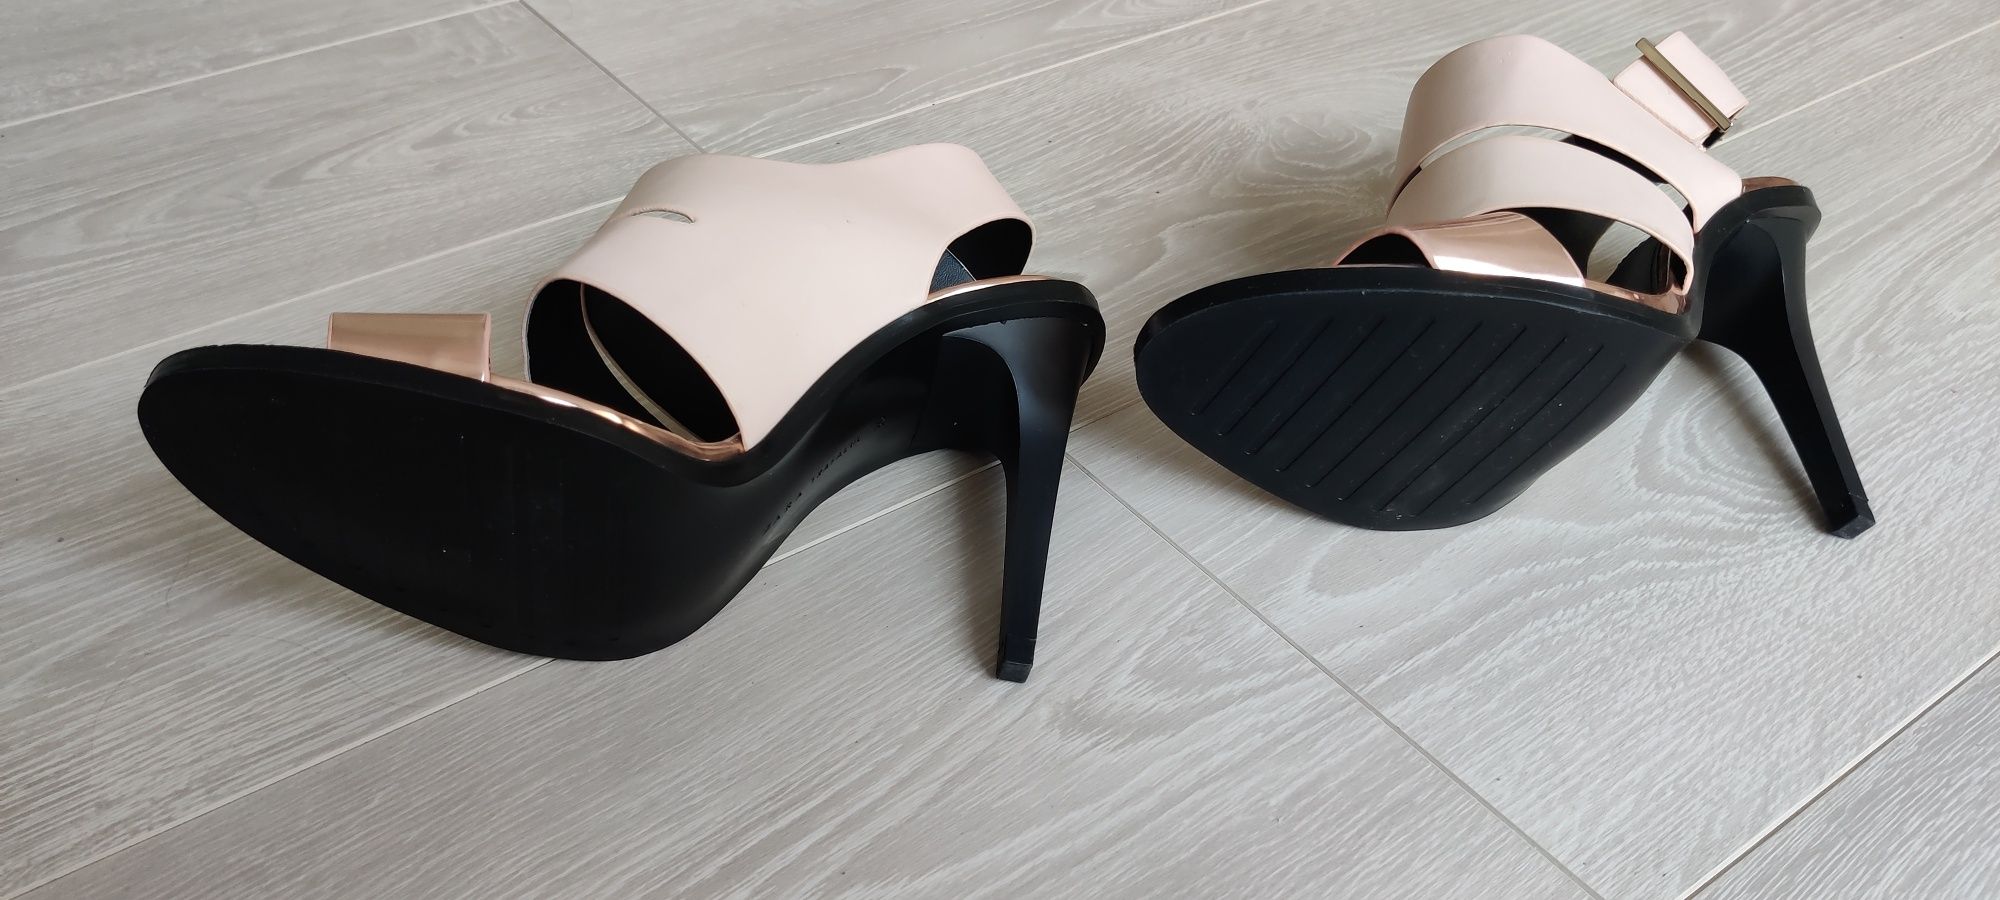 Sandale metalizate Zara